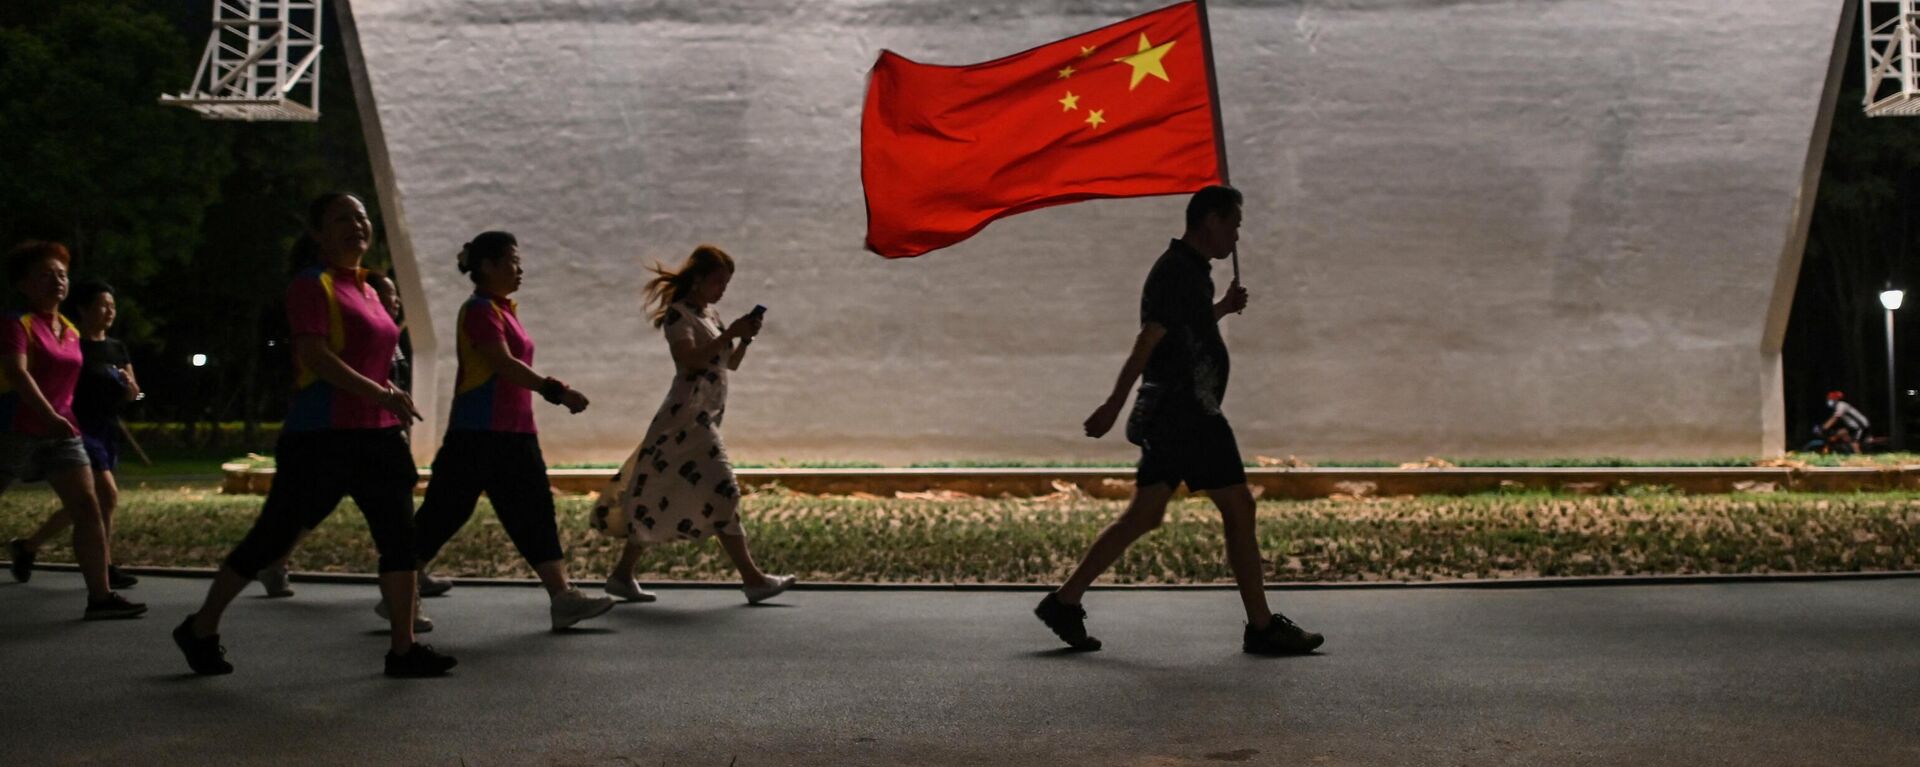 Мужчина с флагом Китая идет по парку в Ухане - Sputnik Узбекистан, 1920, 13.05.2021